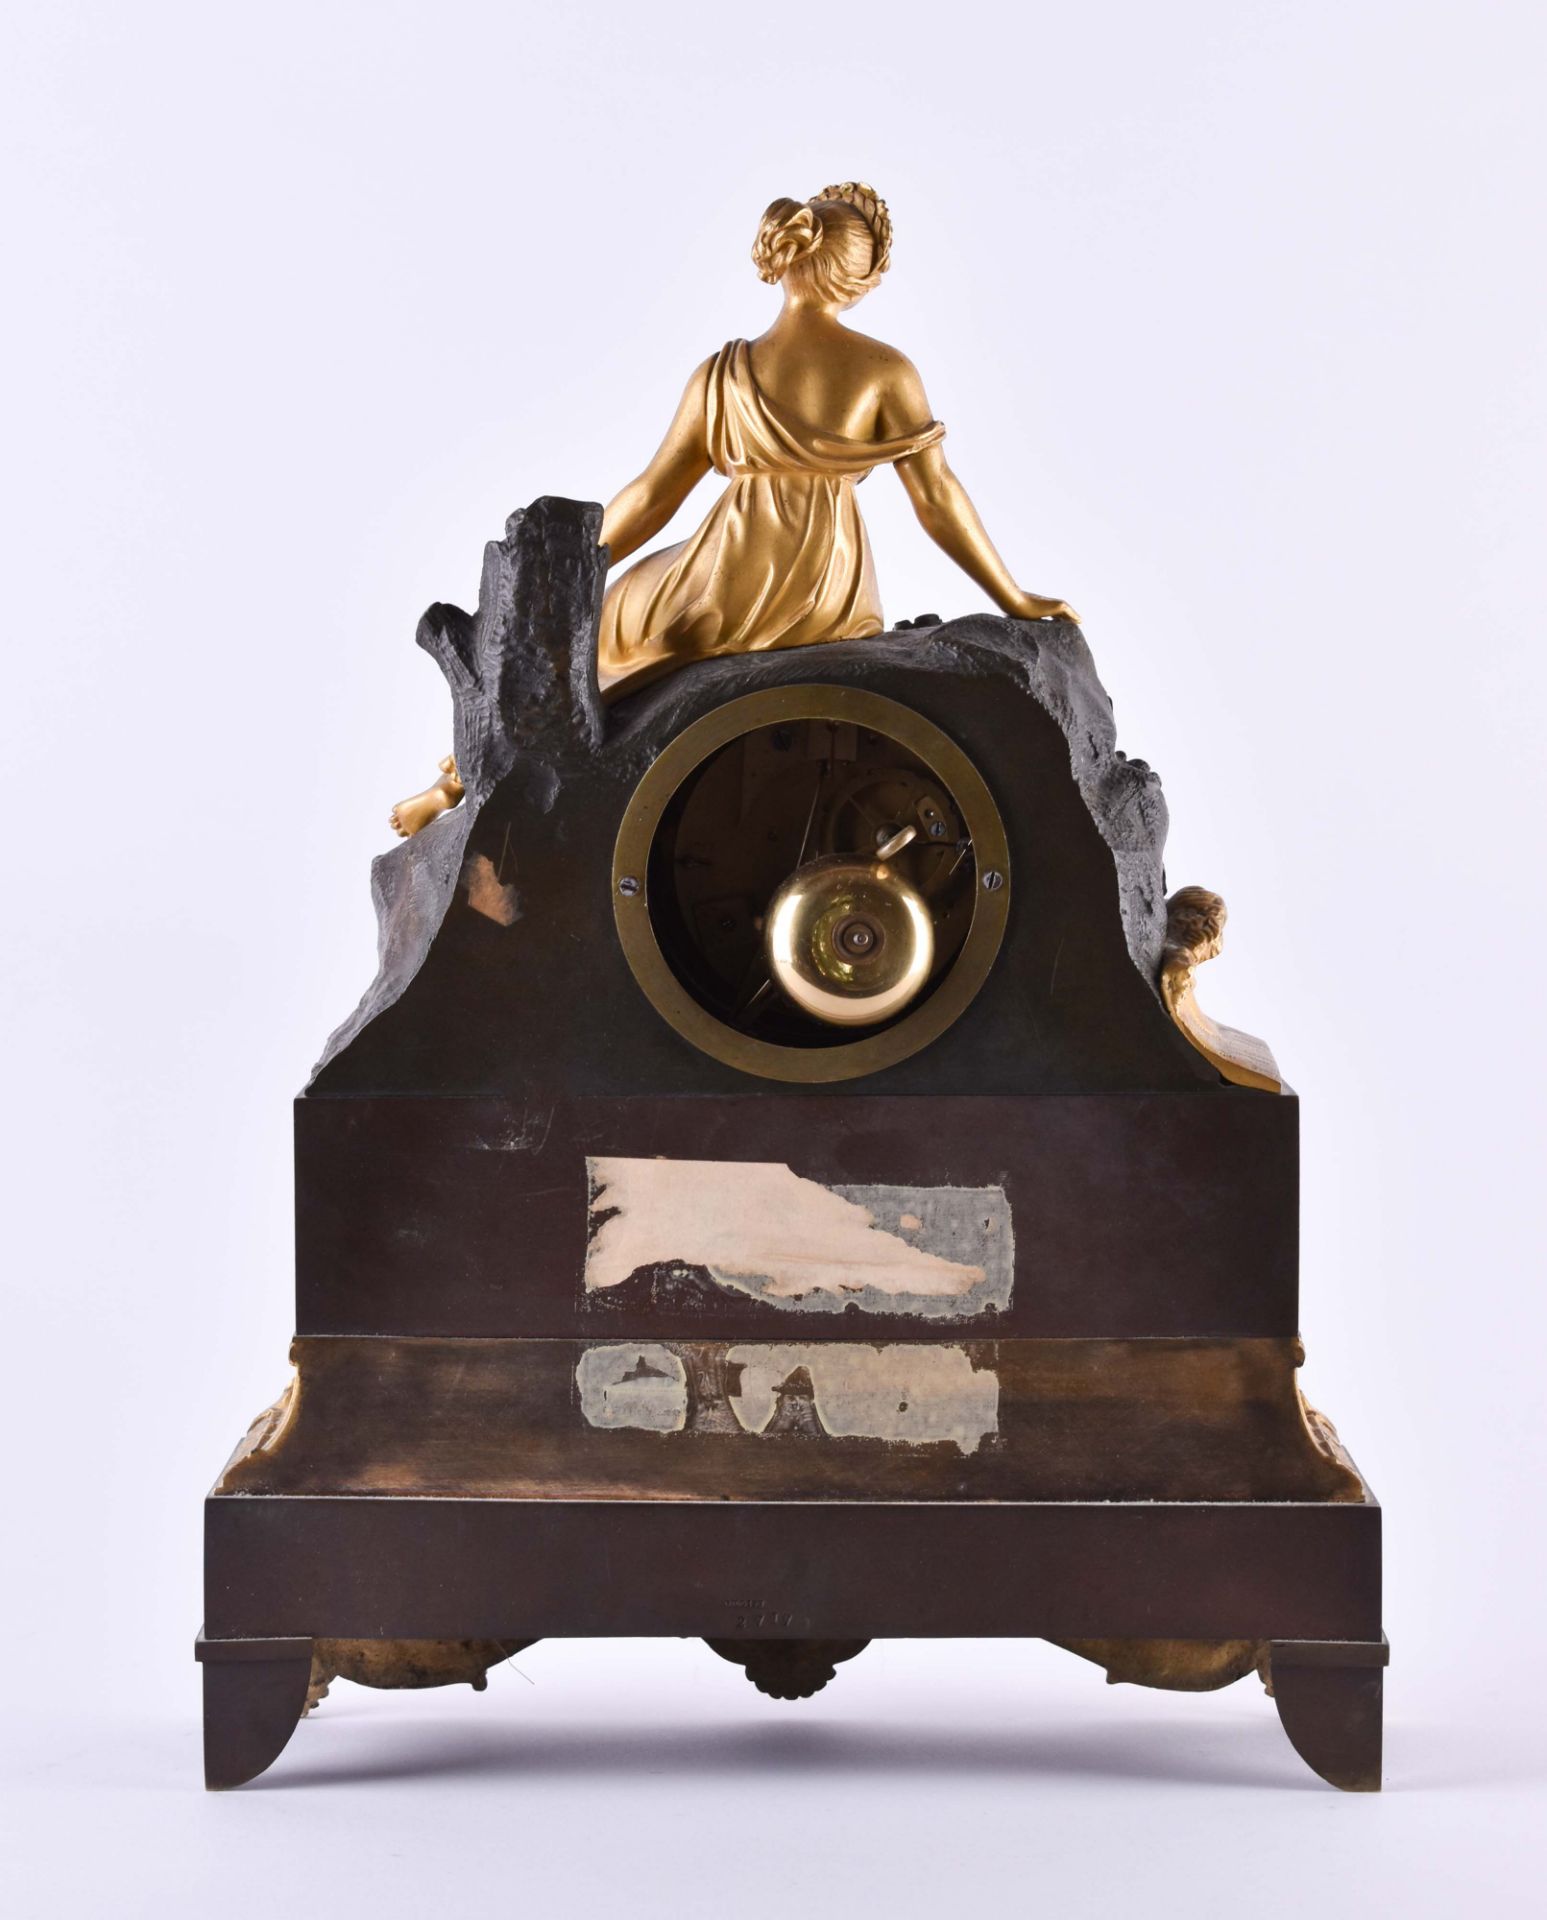 Gillion mantel clock France 19th century - Image 4 of 5